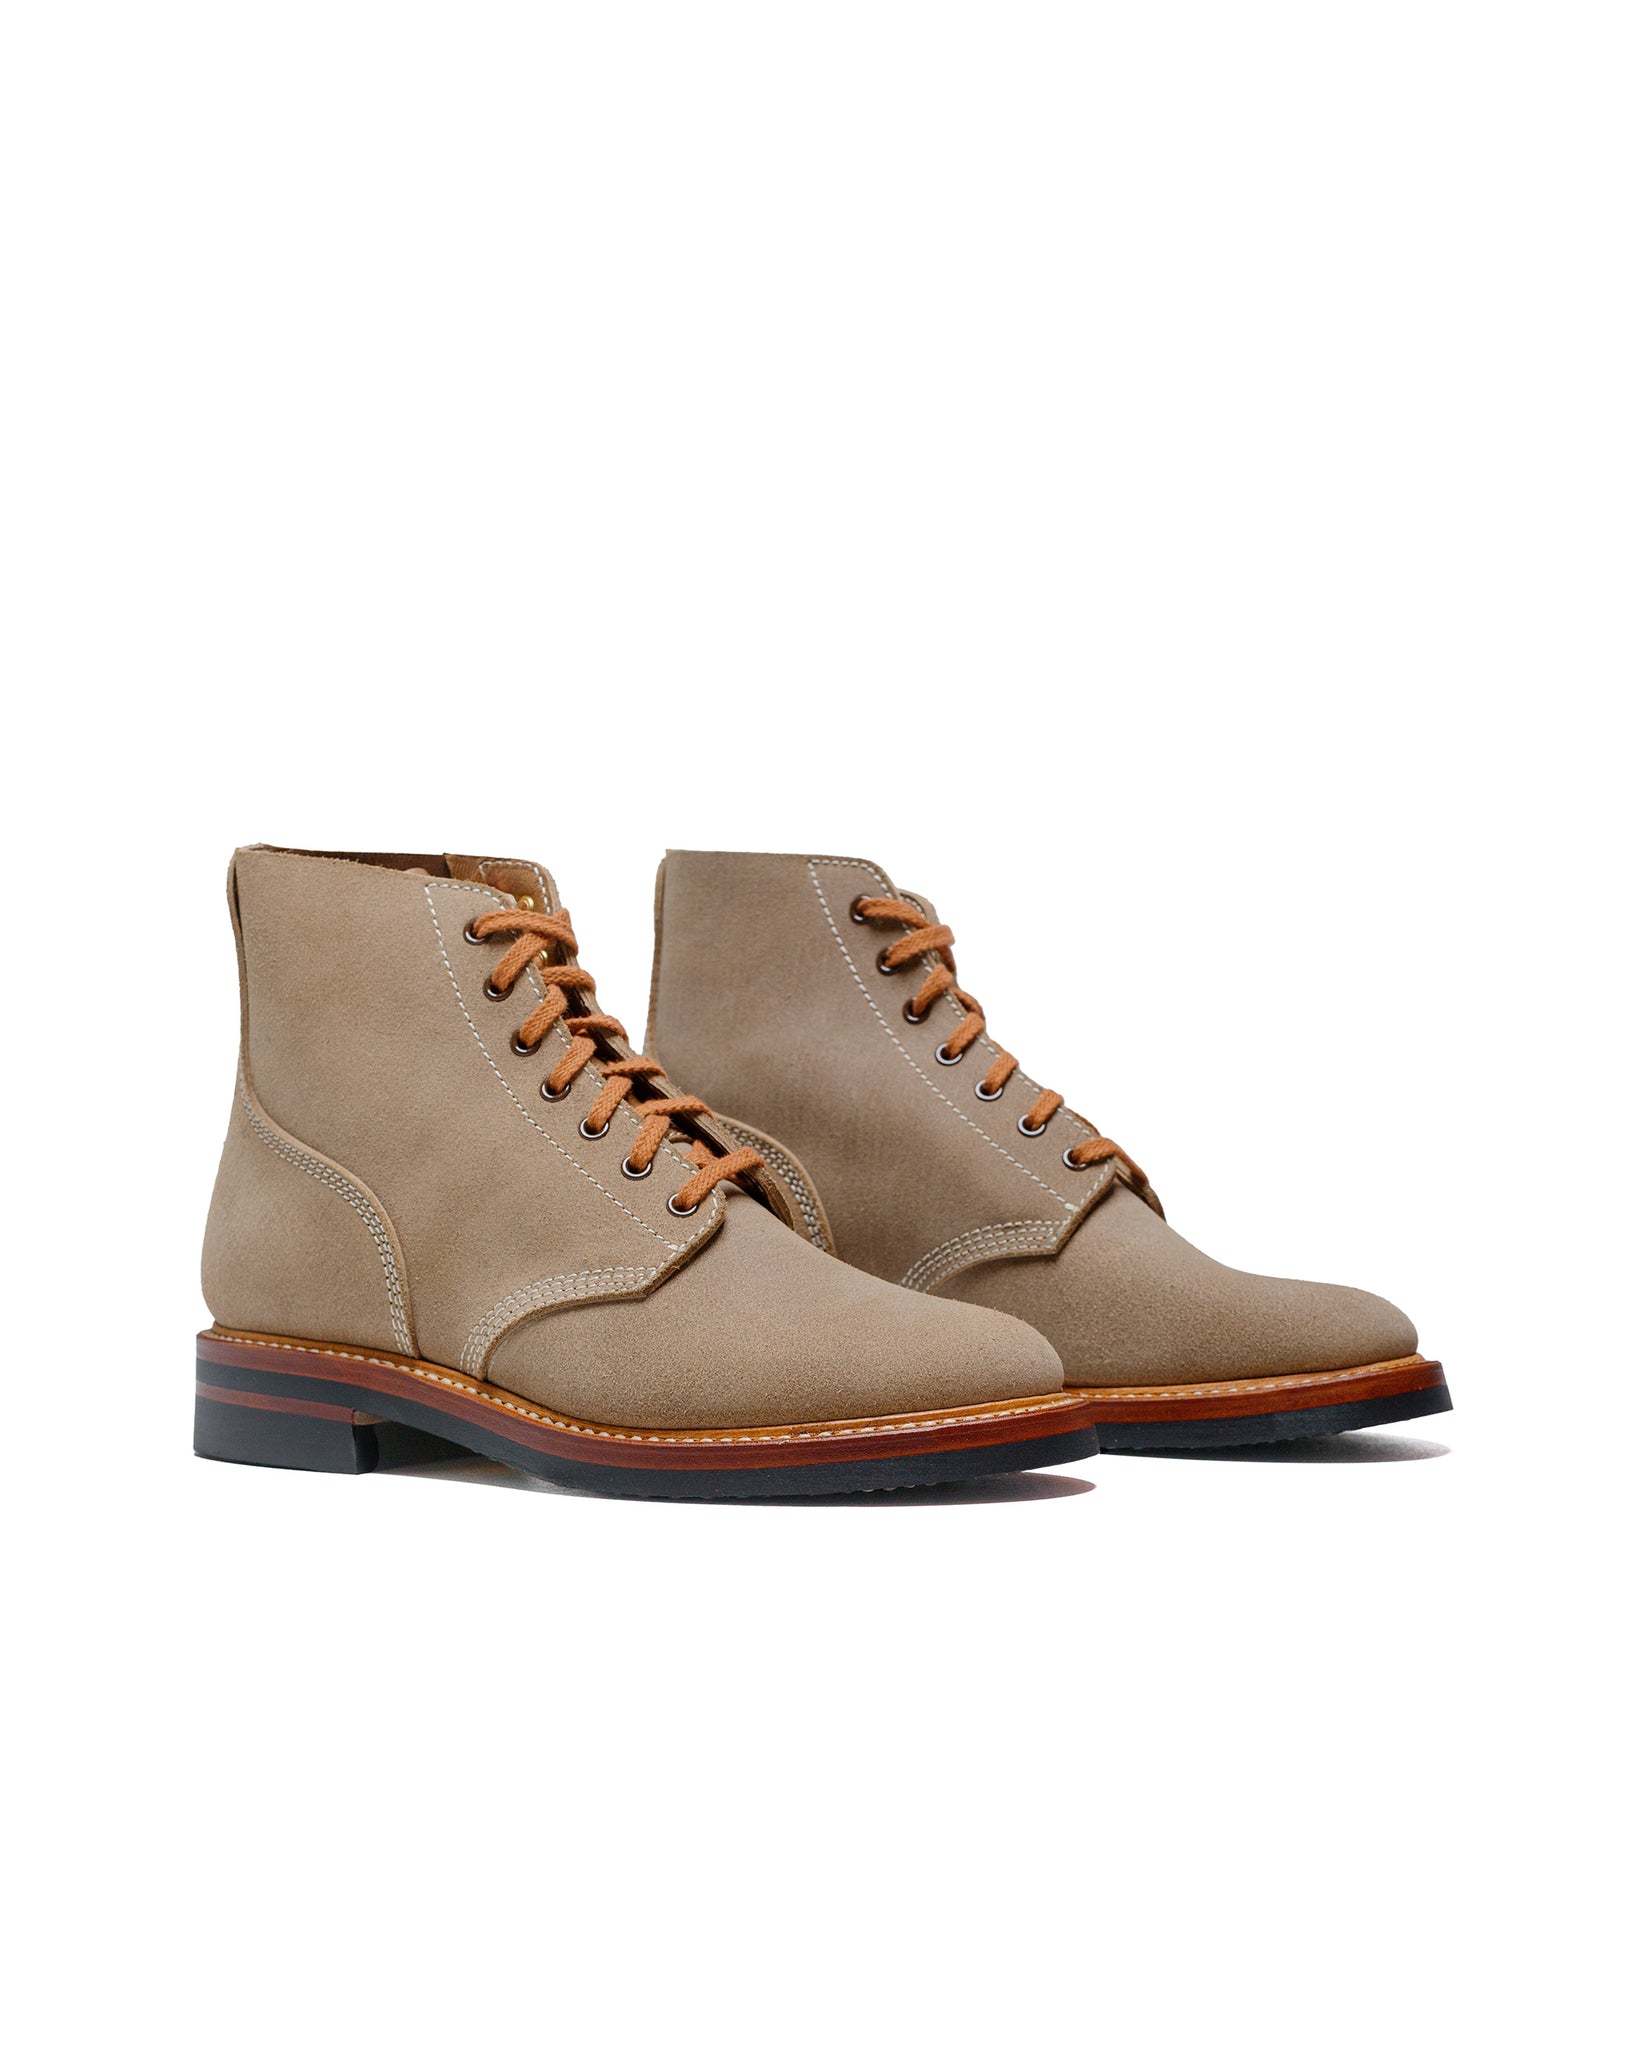 John Lofgren Bootmaker M-43 Service Shoes Horween Leather CXL Natural Roughout side